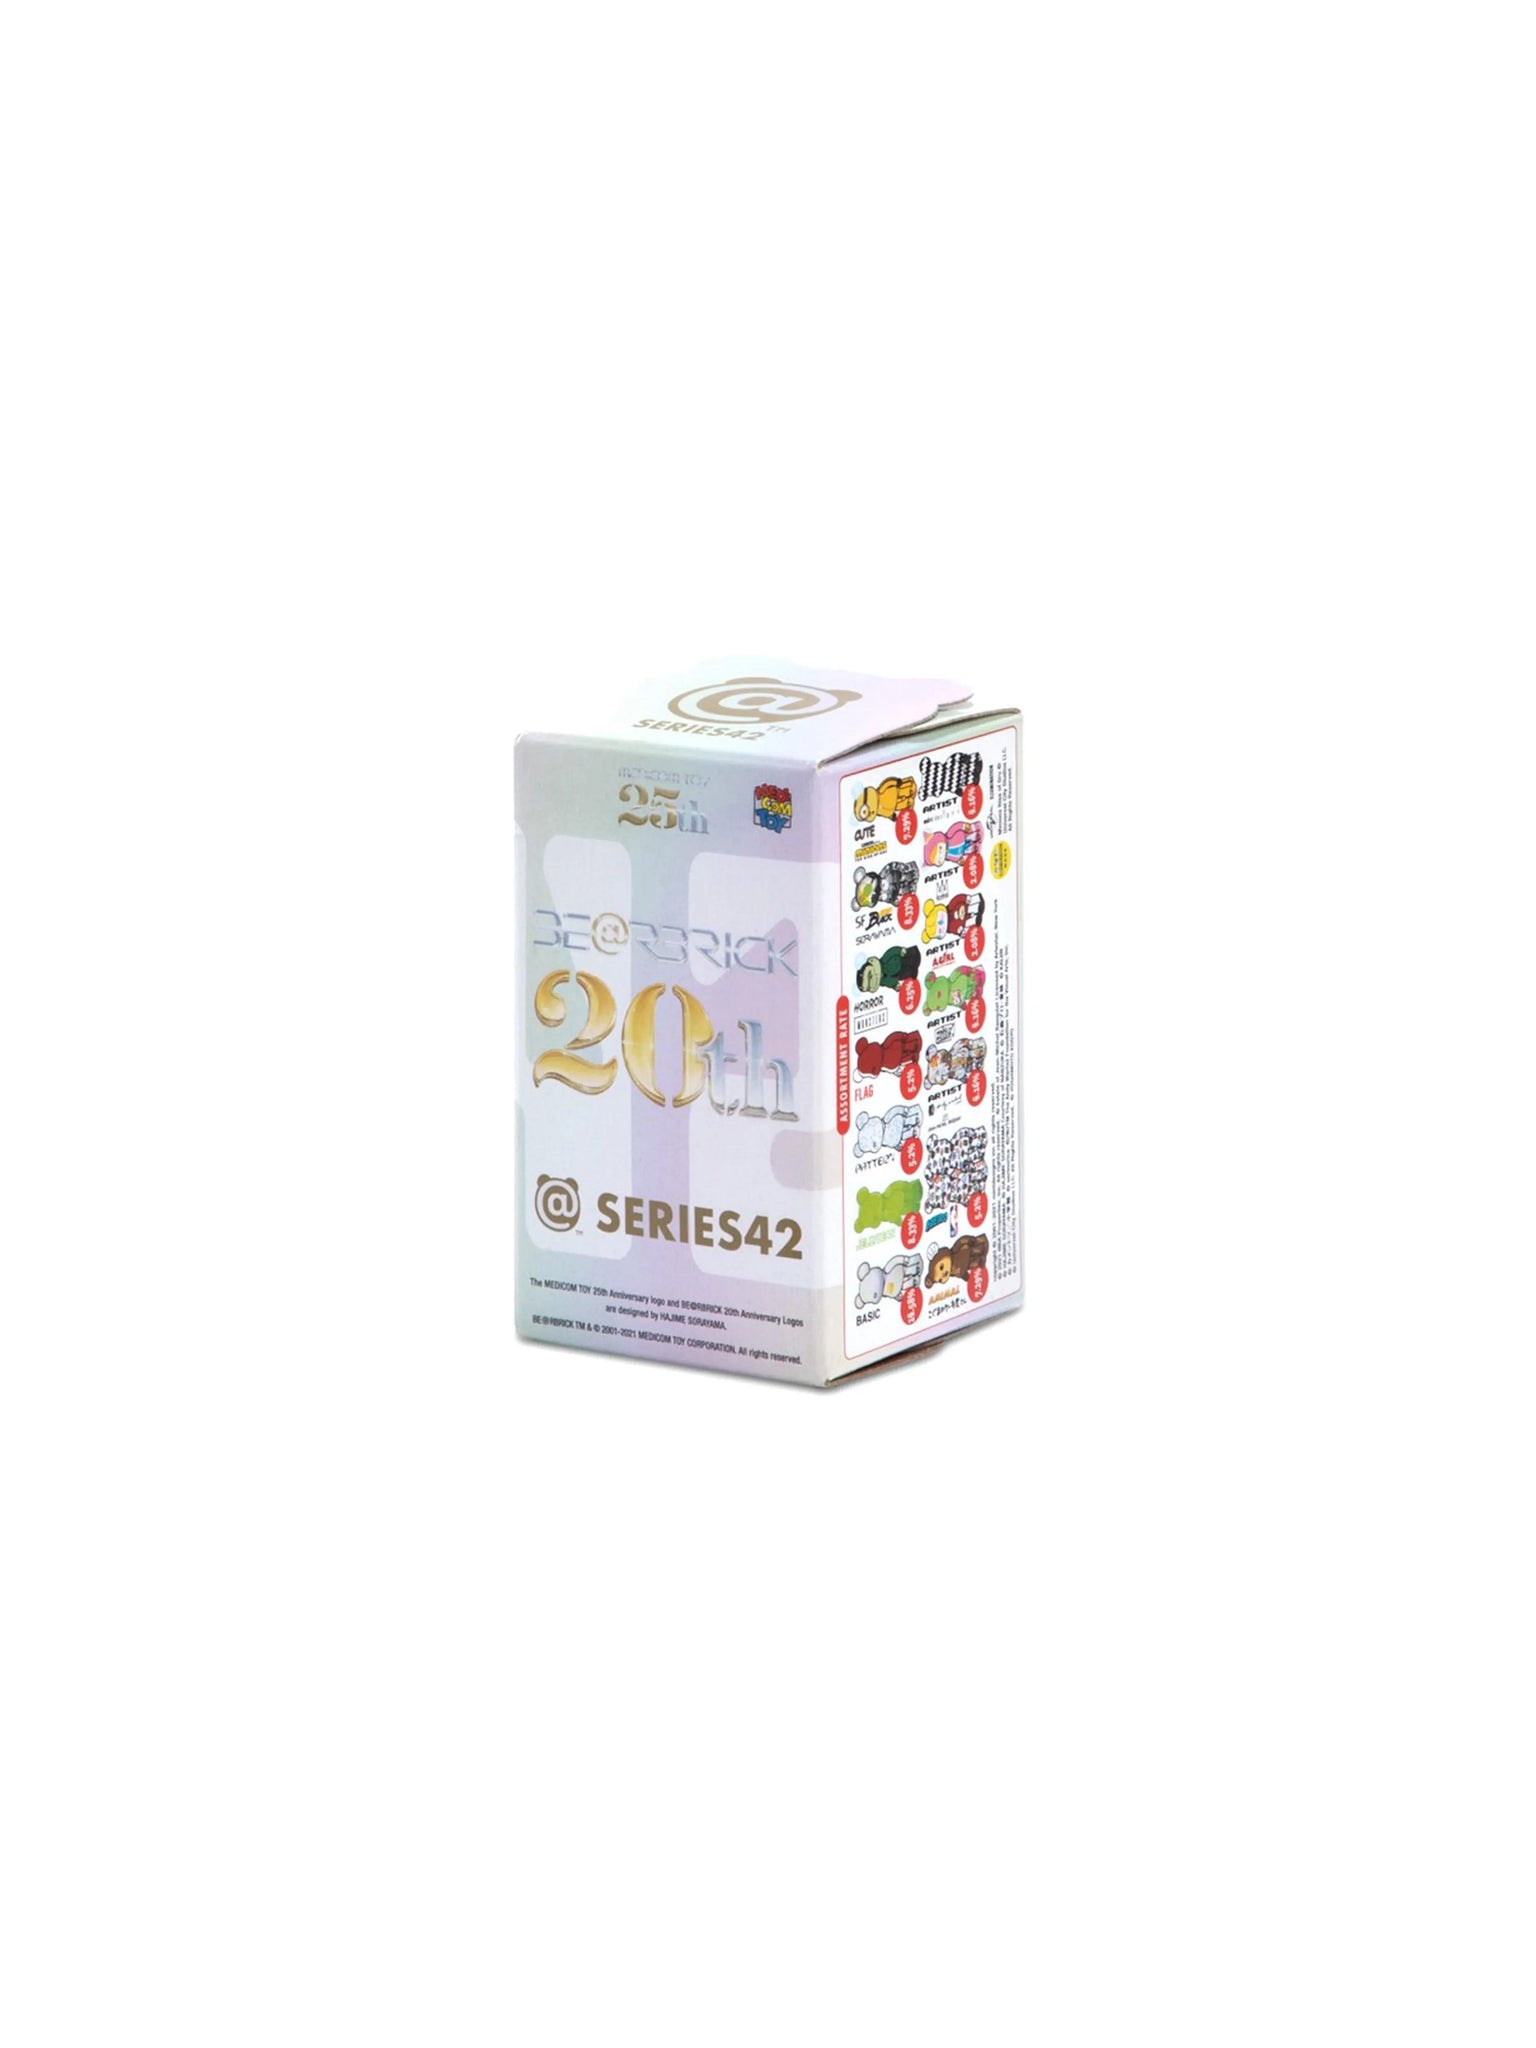 Medicom Toy Be@arbrick 20th & 25th Anniversary Series 42 Blind Box 100% Prior